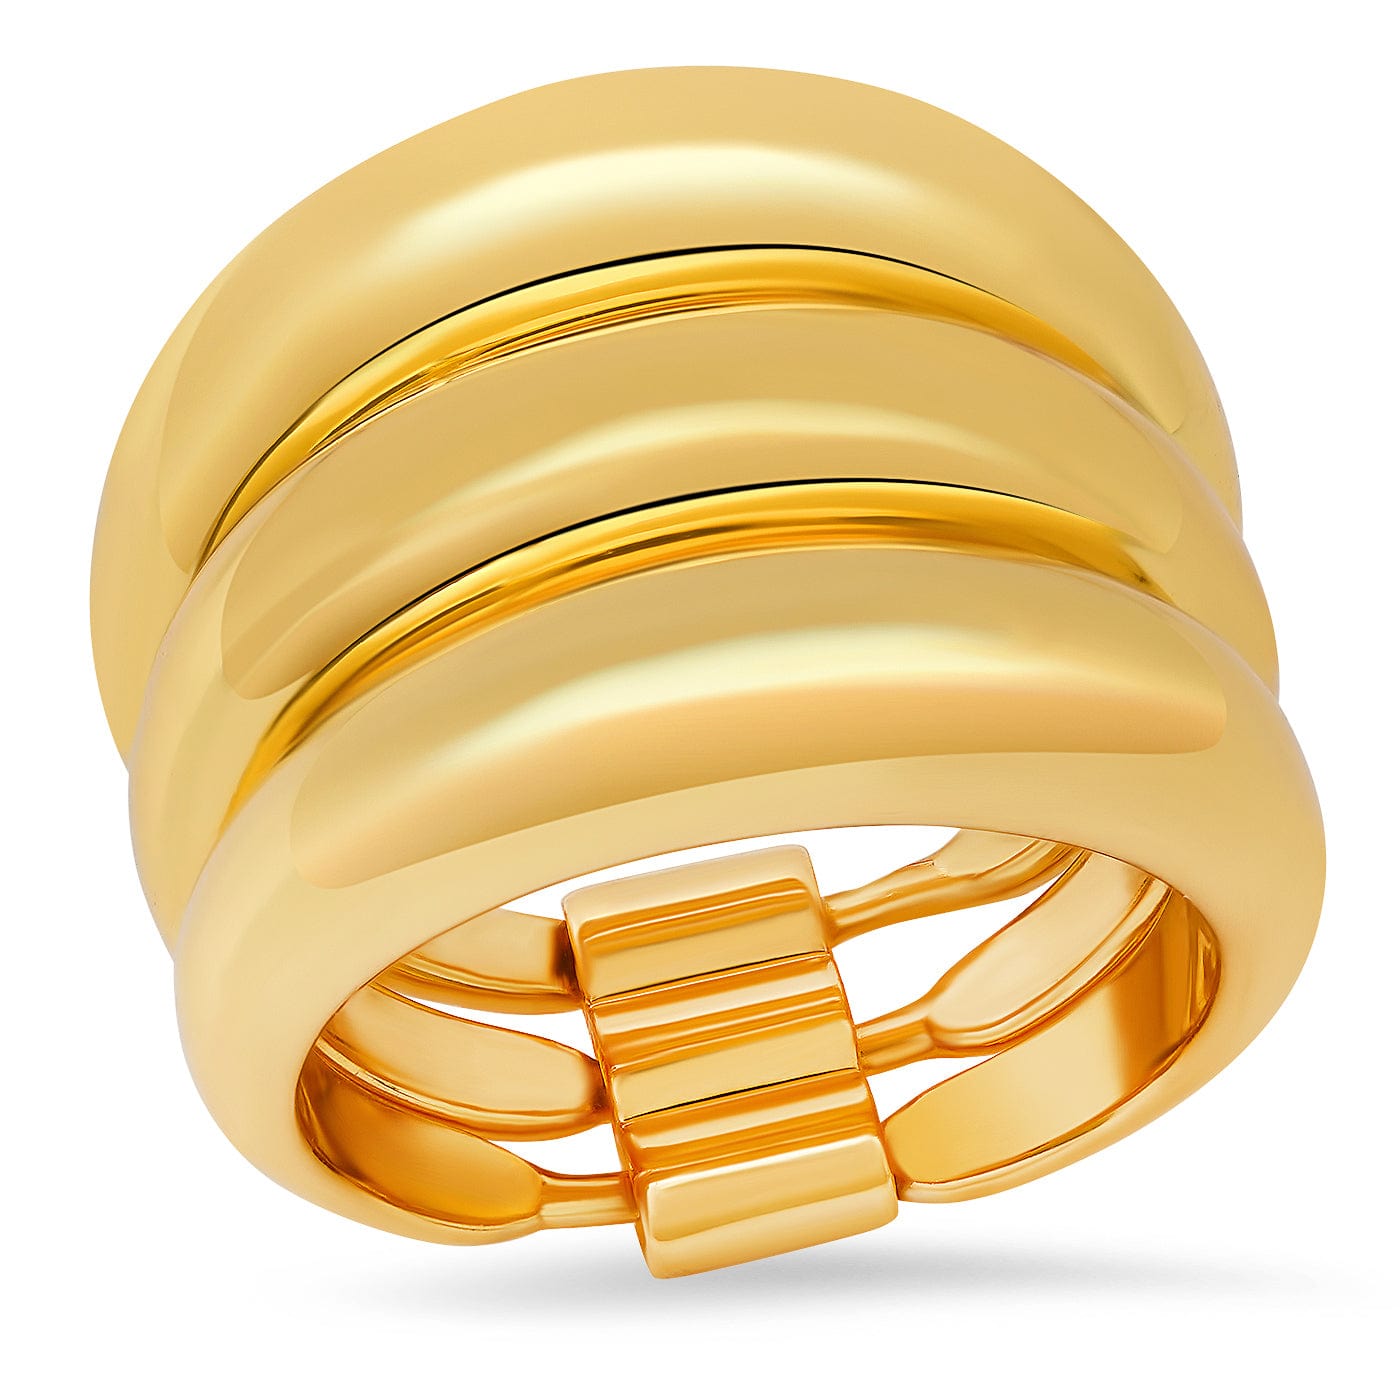 TAI JEWELRY Rings 6 Gold Triple Band Ring